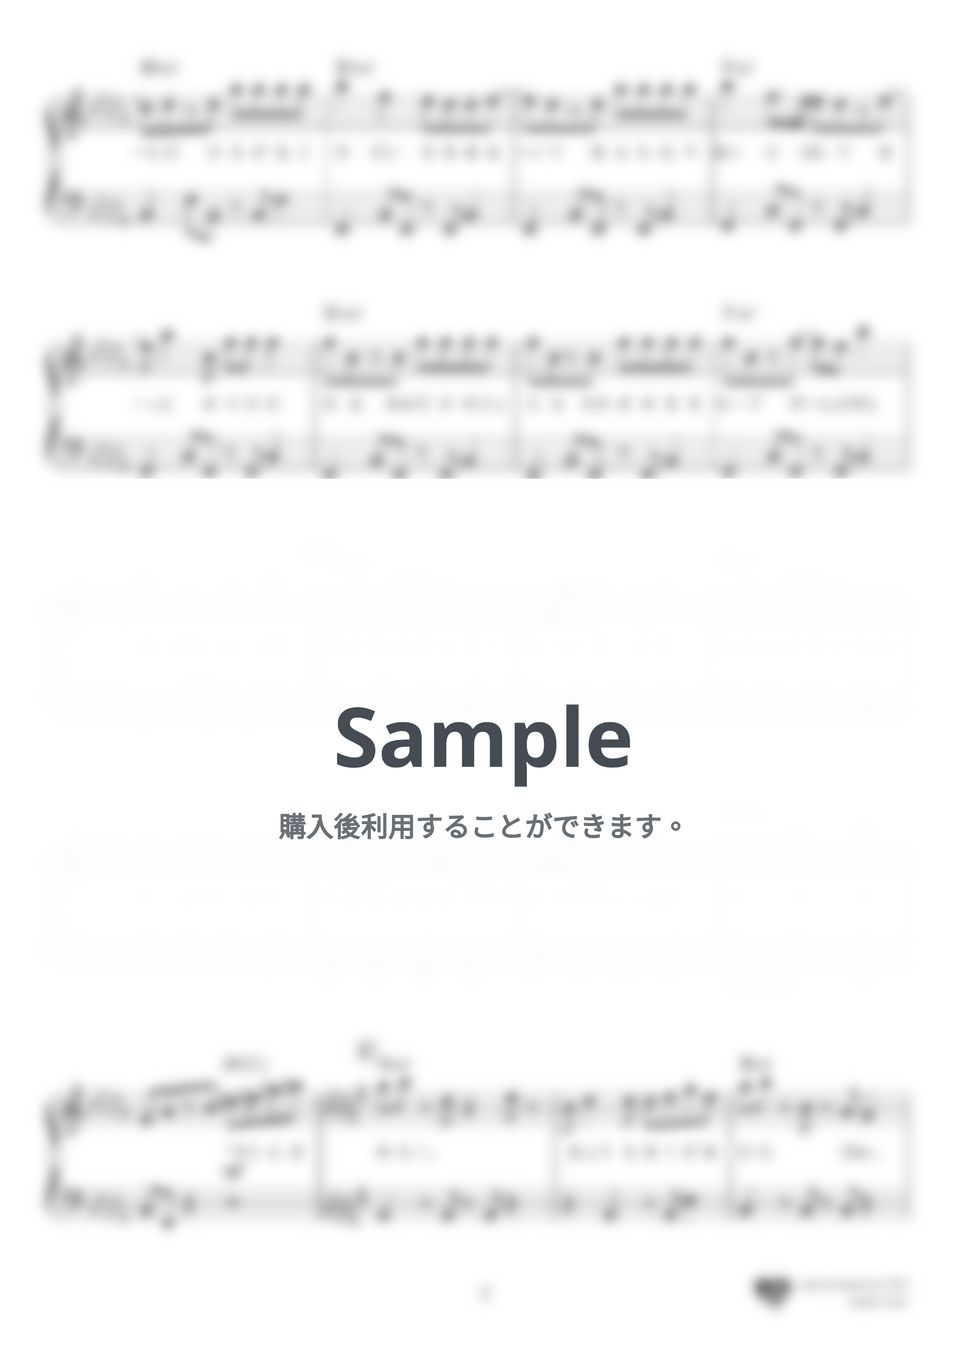 YOASOBI - Biri-Biri (『ポケモン スカーレット・バイオレット』インスパイアソング) by 楽譜仕事人_川口晴子